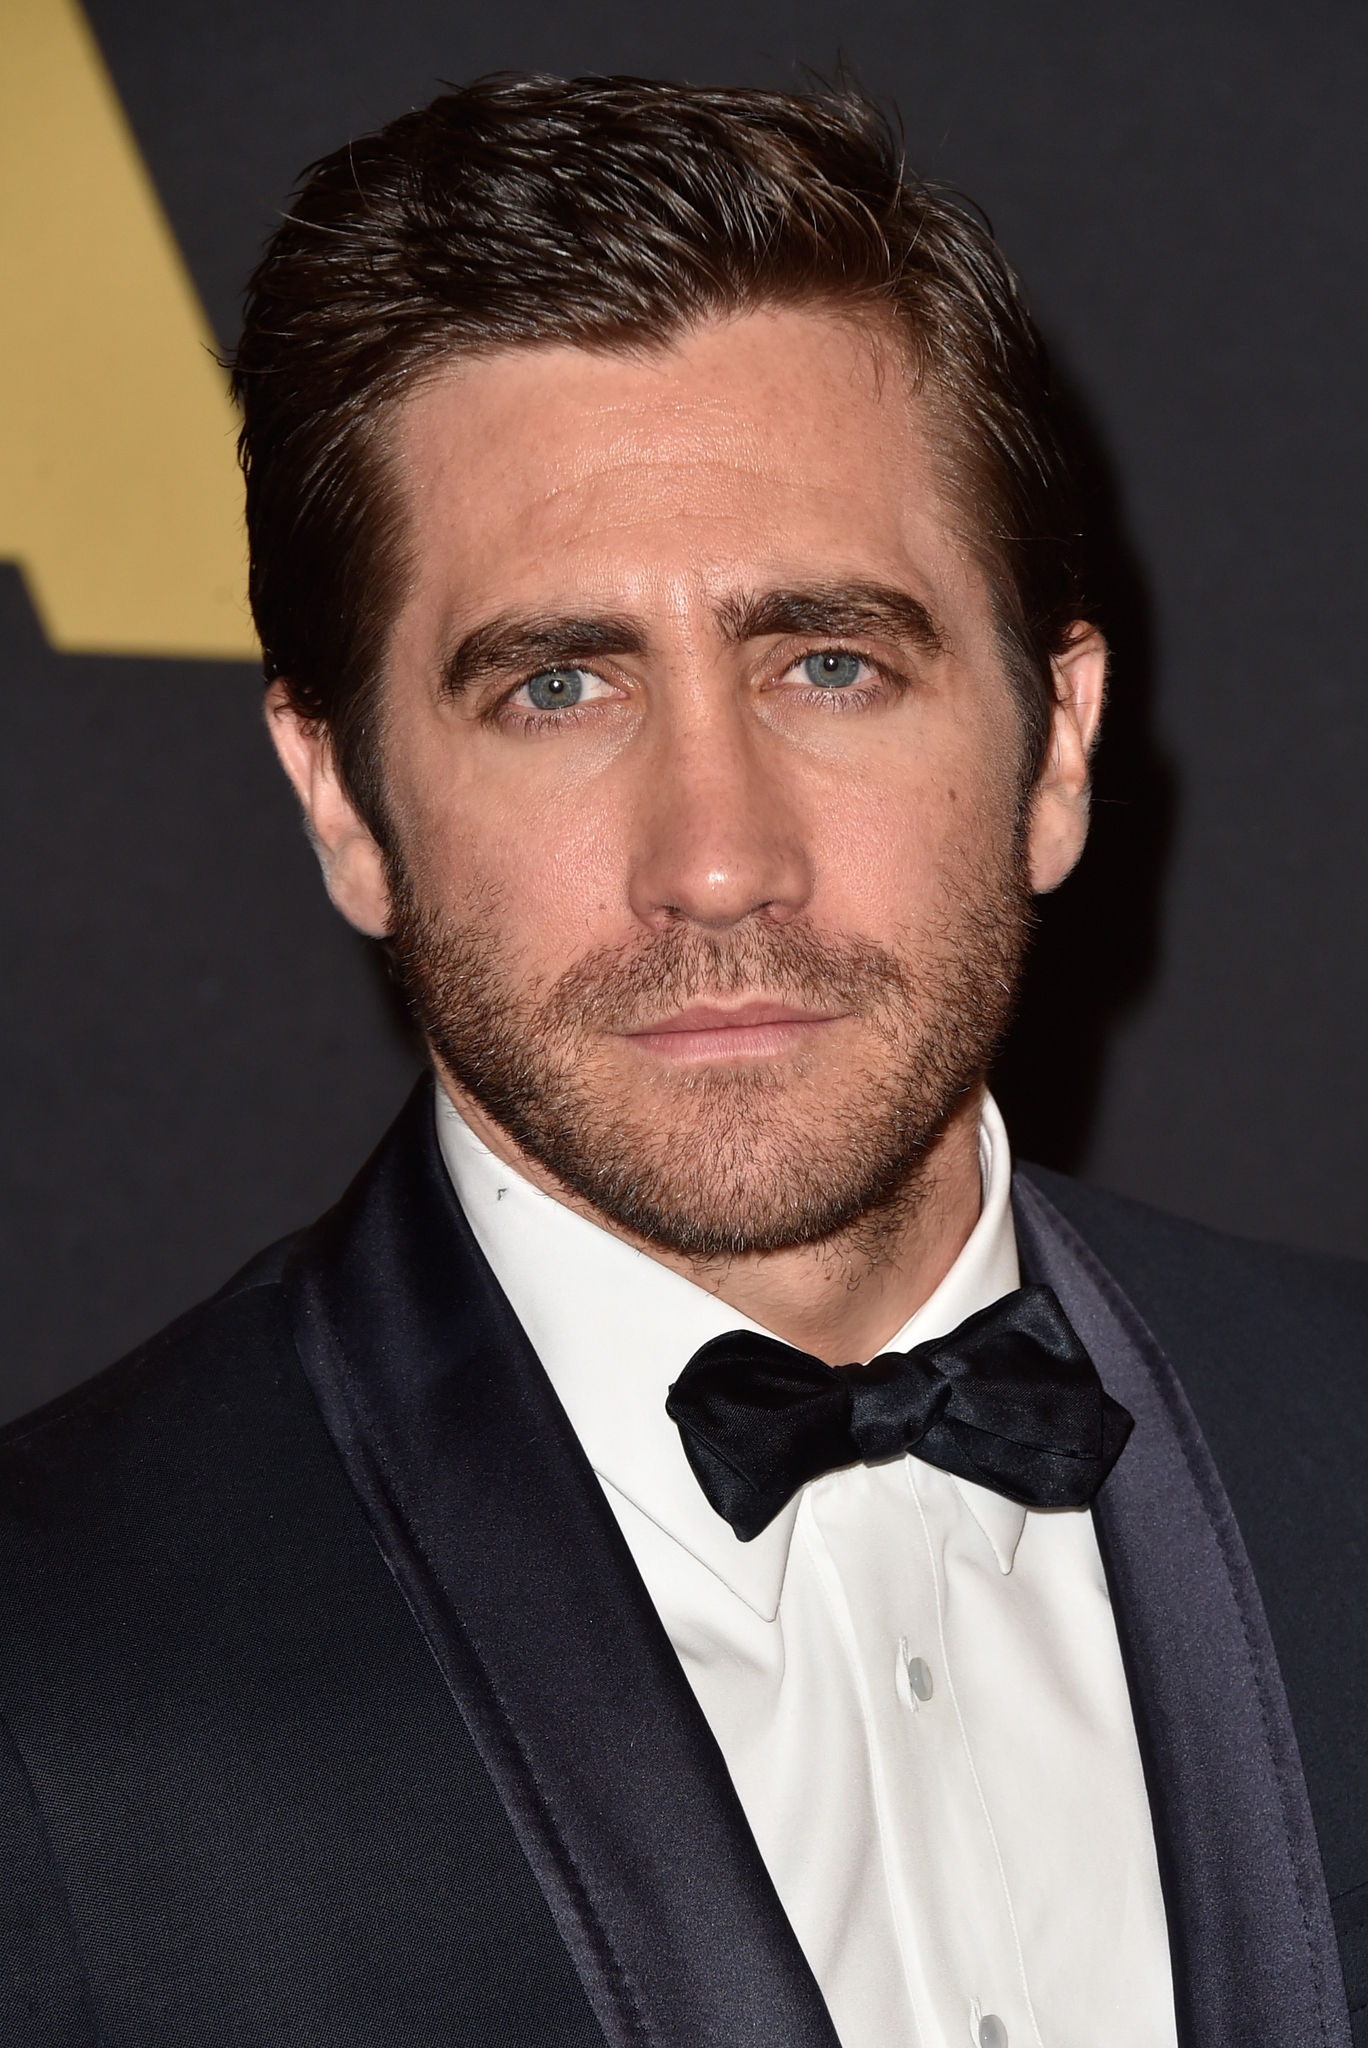  Biografi Jake Gyllenhaal